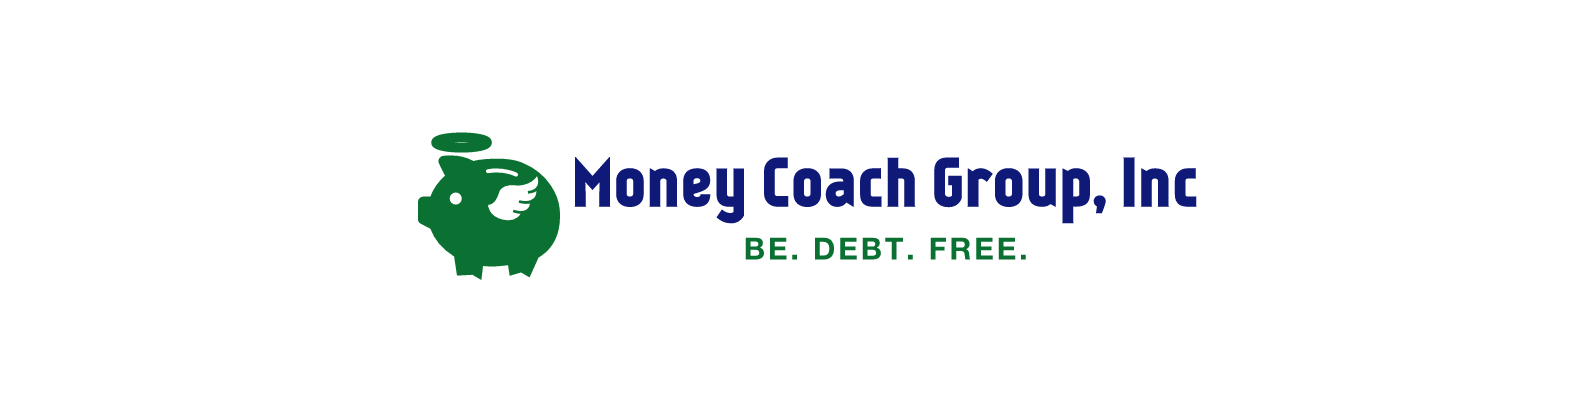 Money Coach Group, Inc.